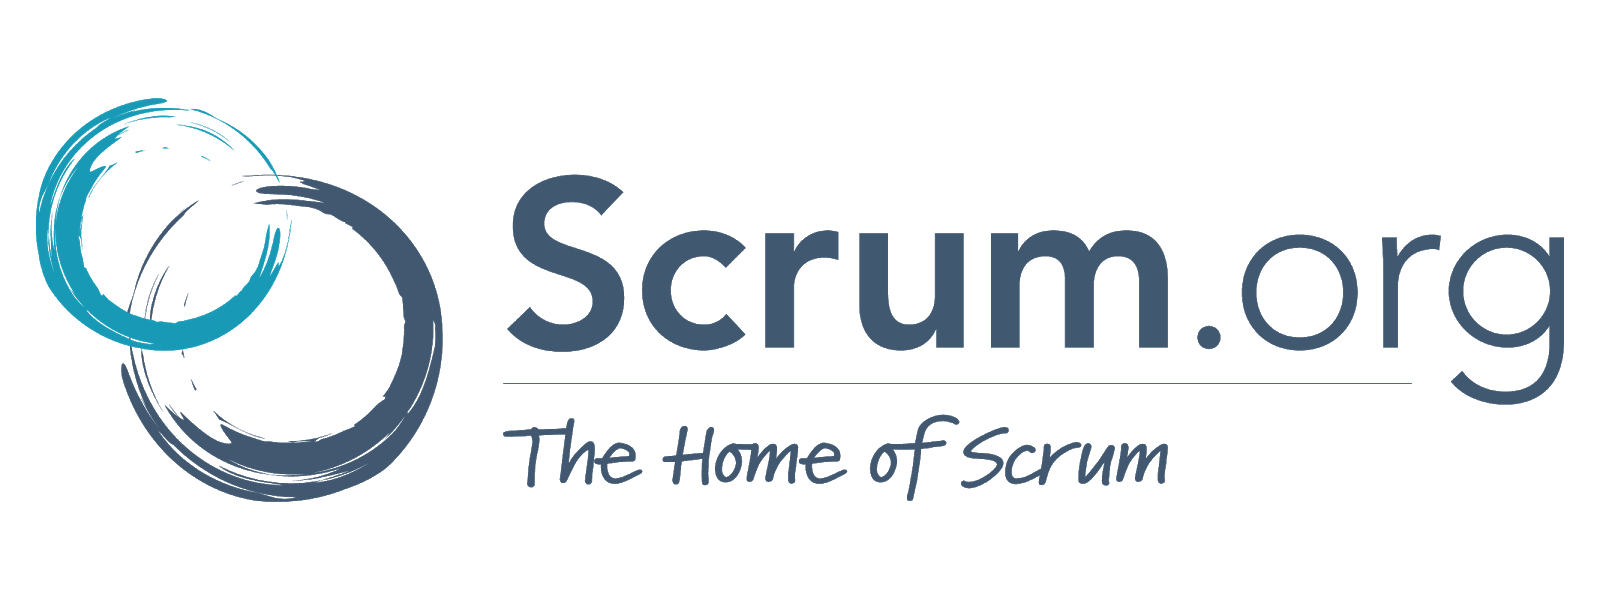 scrumorg-logo